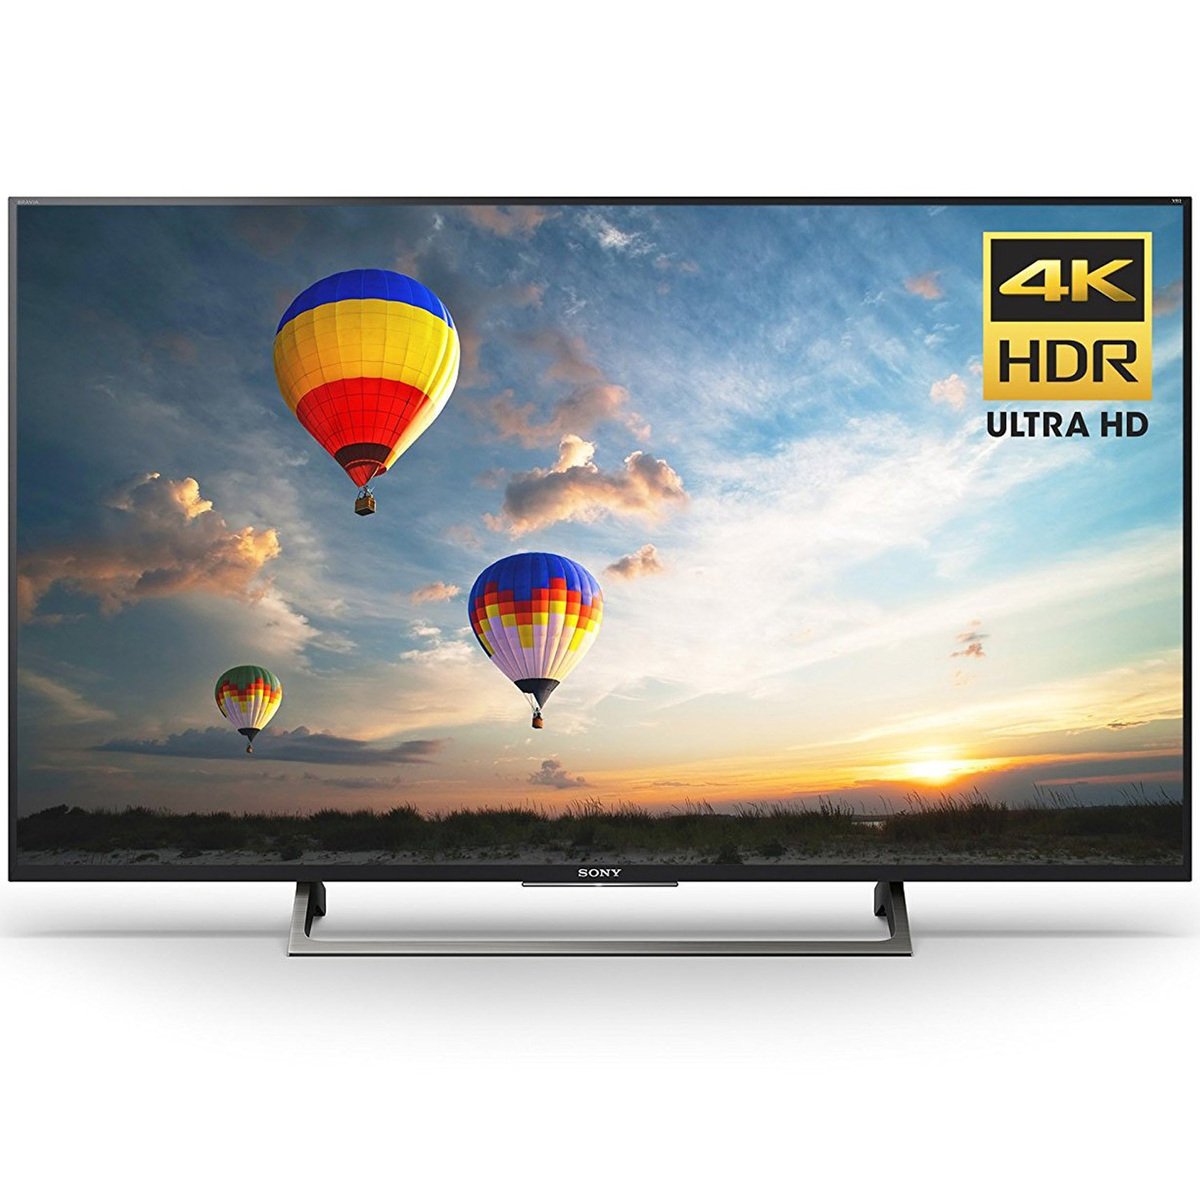 Sony Ultra HD Smart LED TV KDL43X8000E 43inch